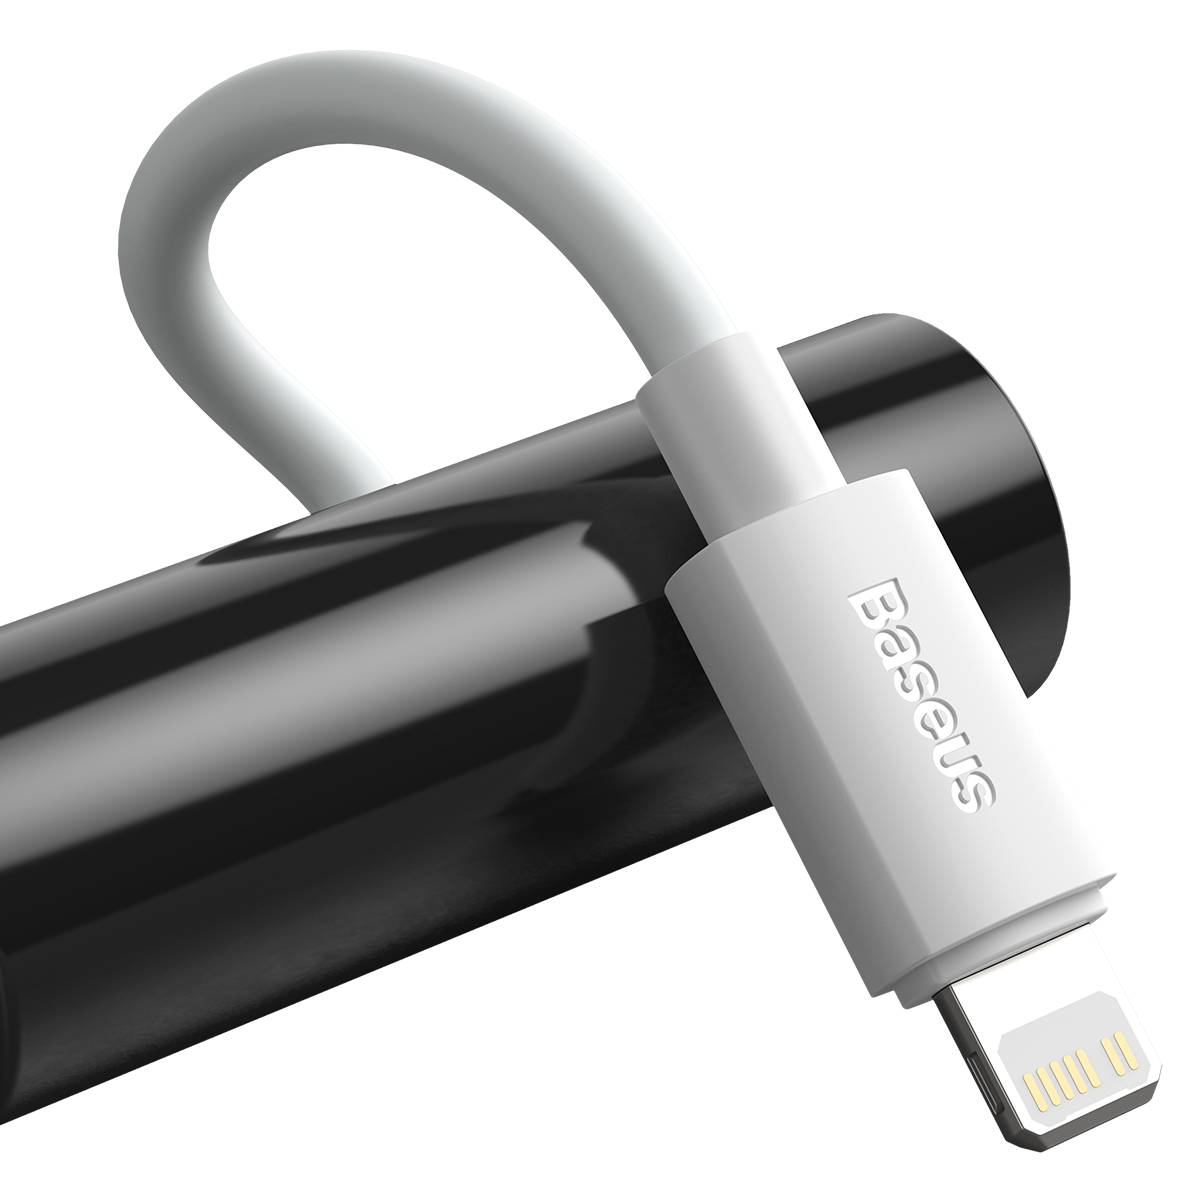 Baseus Simple USB-C-Lightning-kabel, PD, 20W, 1.5m, 2-pack